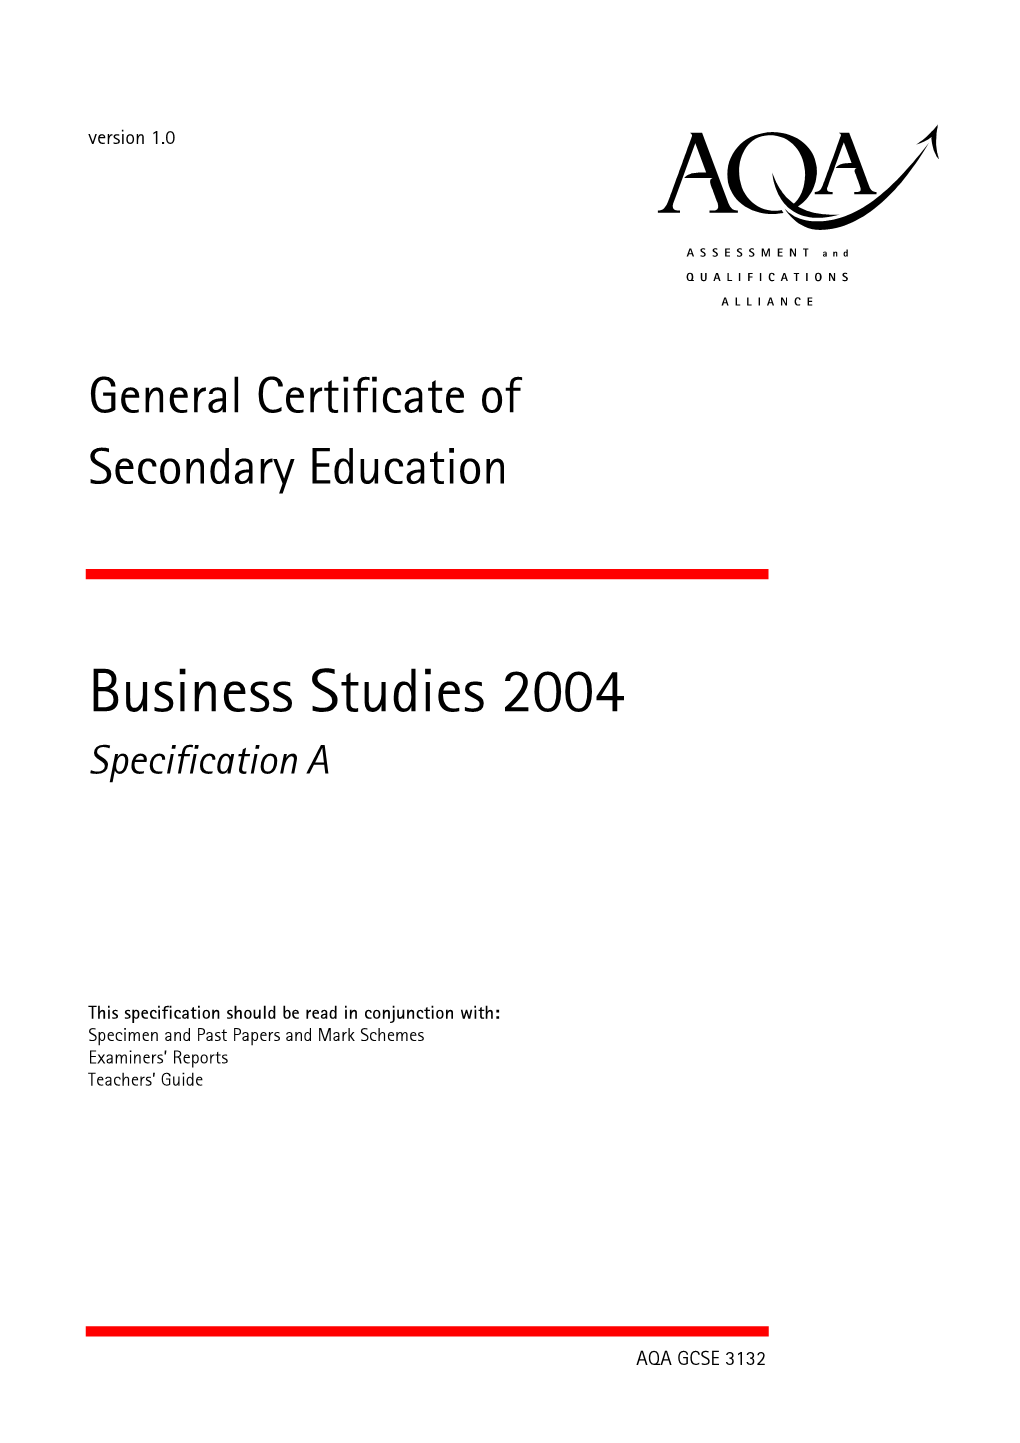 AQA GCSE Business Studies Specification A